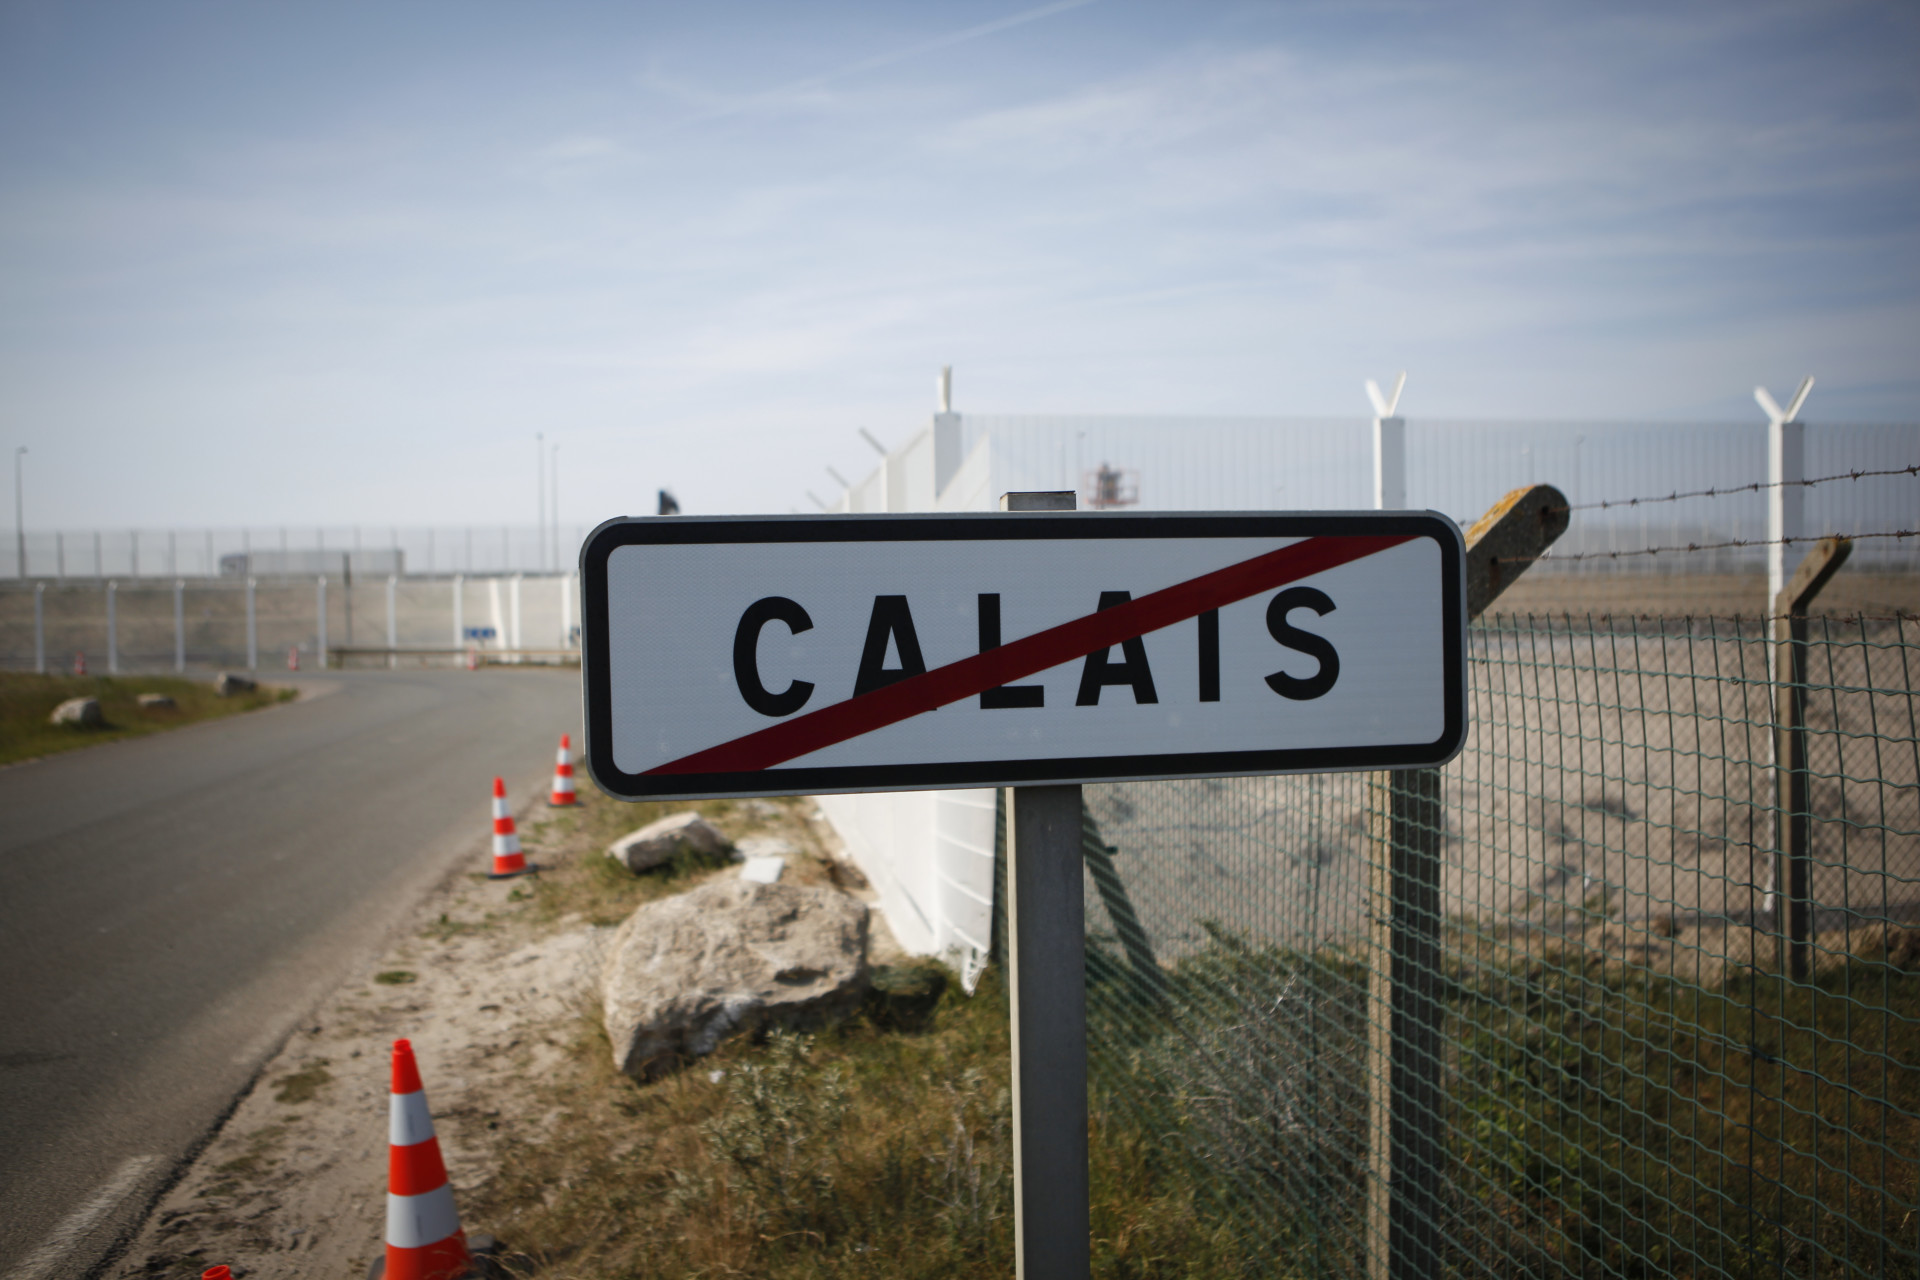 The Gangs of Calais